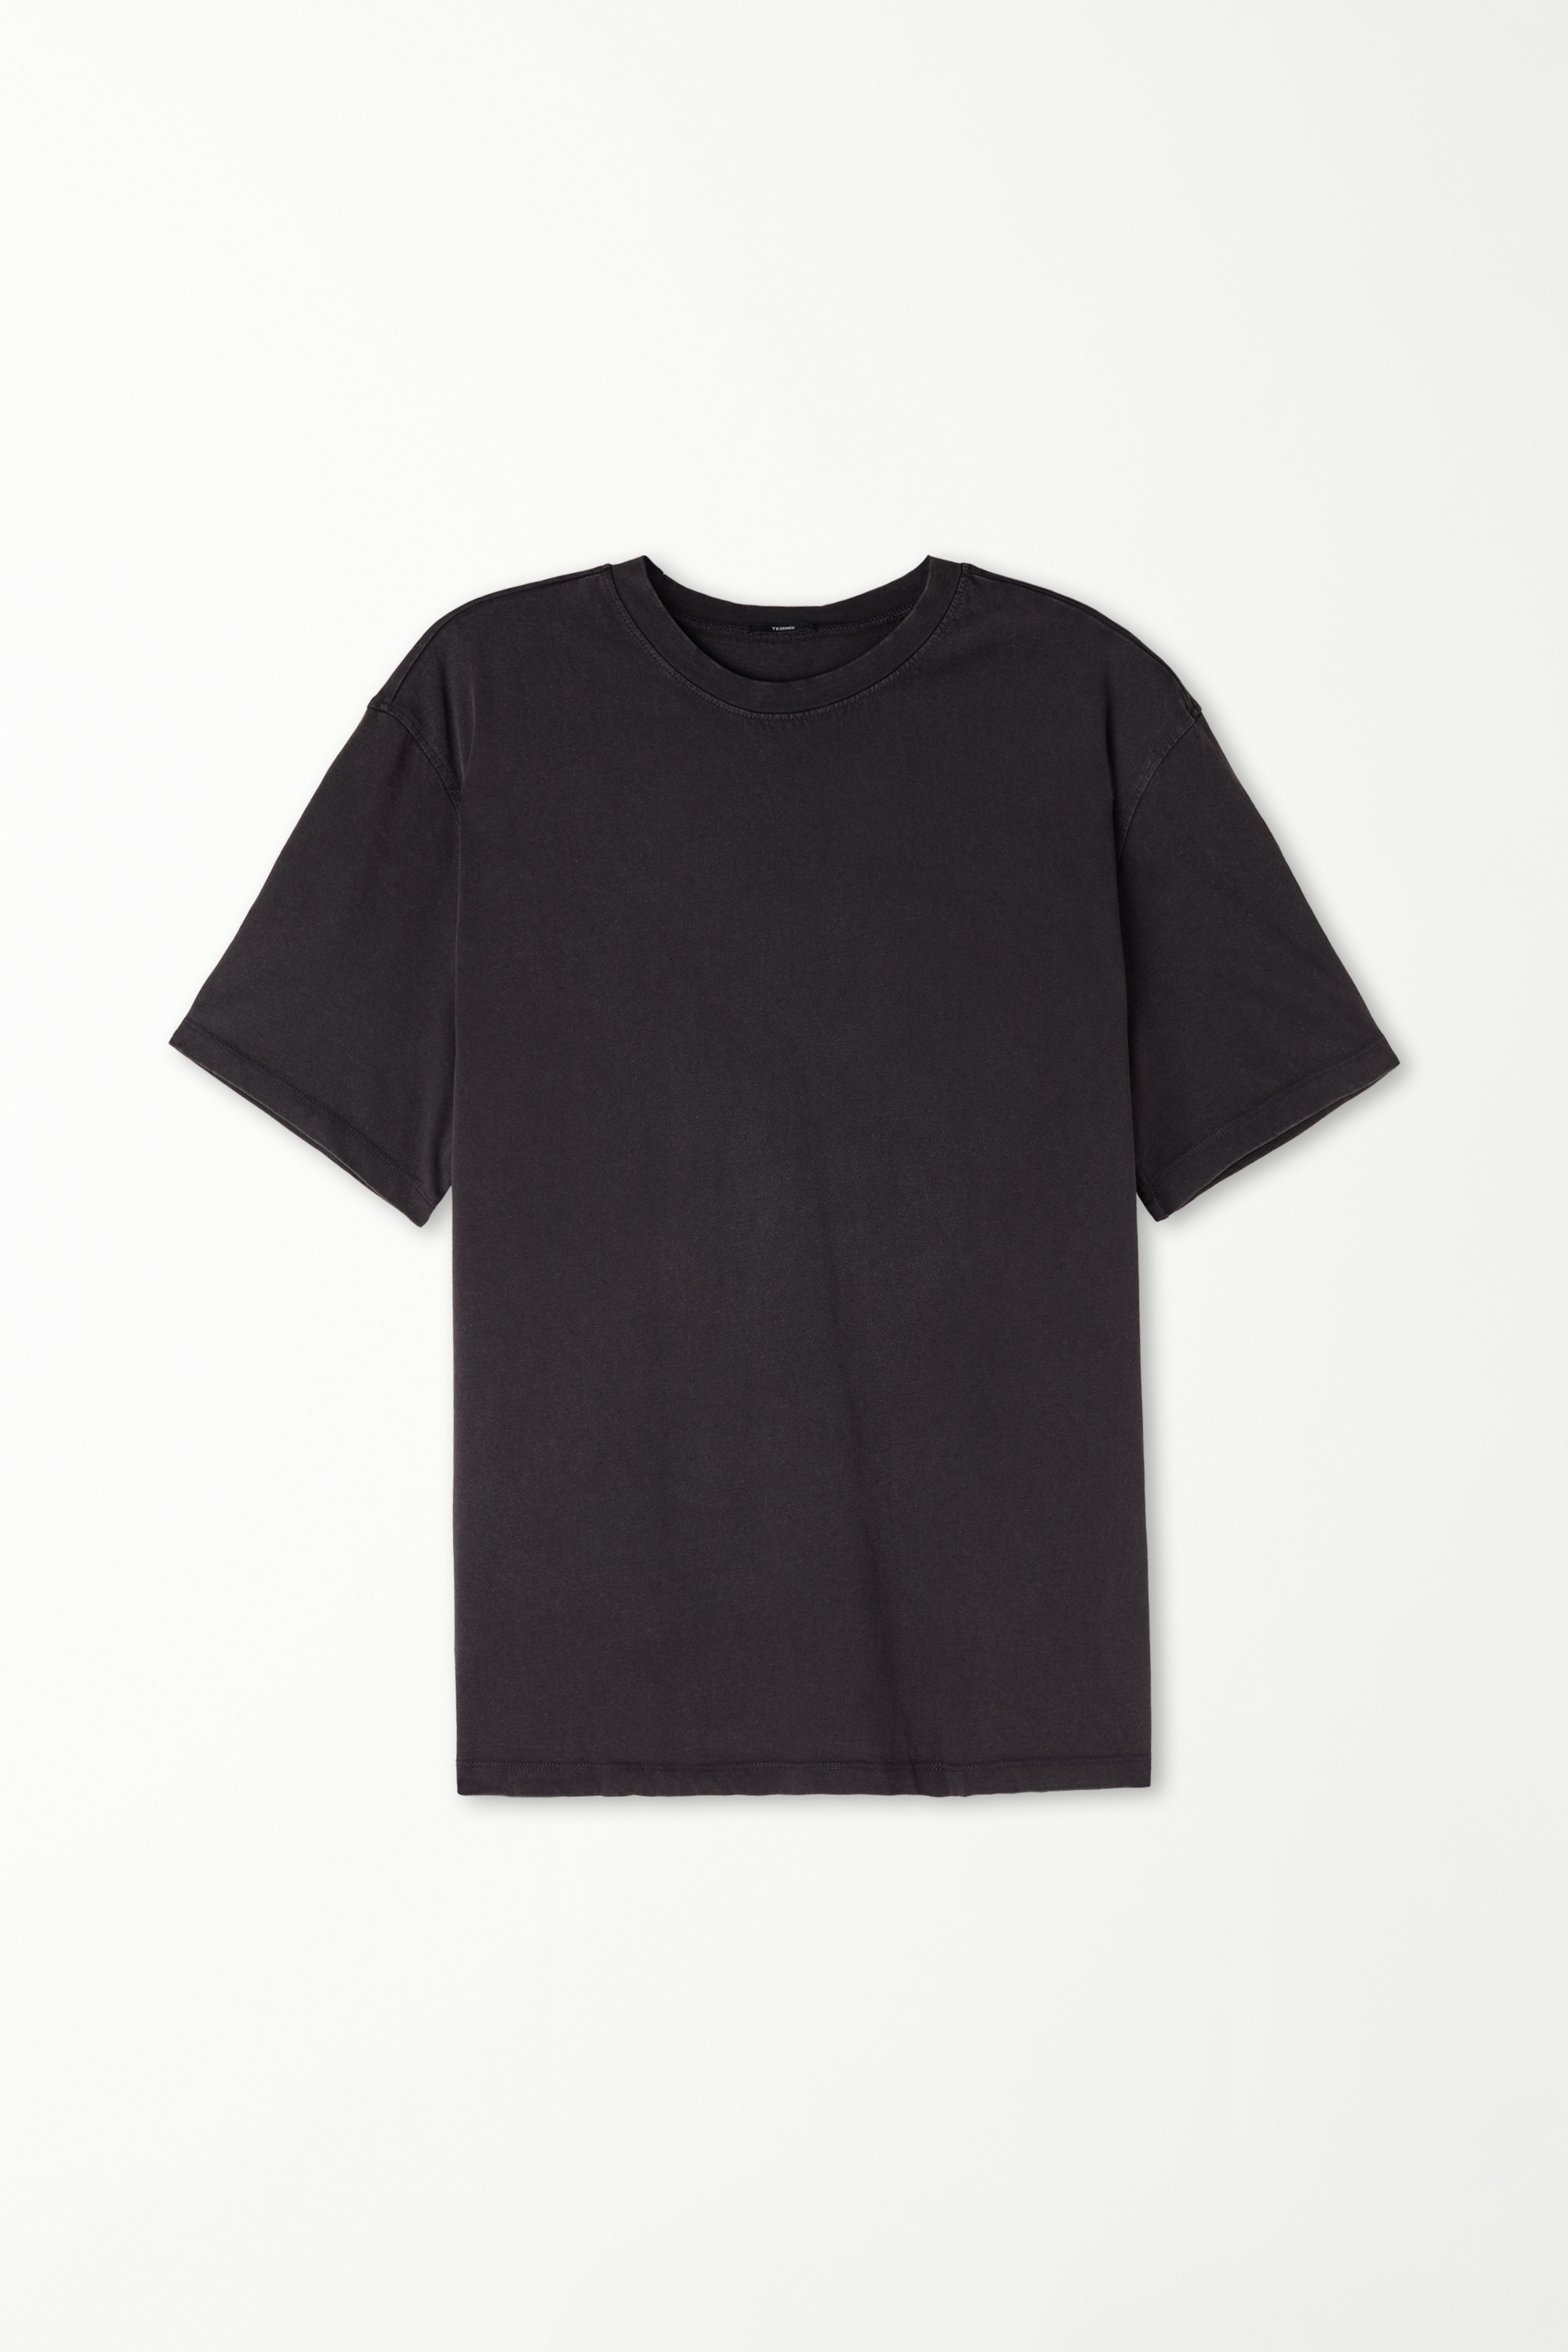 T-Shirt Στρογγυλή Λαιμόκοψη Βαμβακερό Πετροπλυμένο